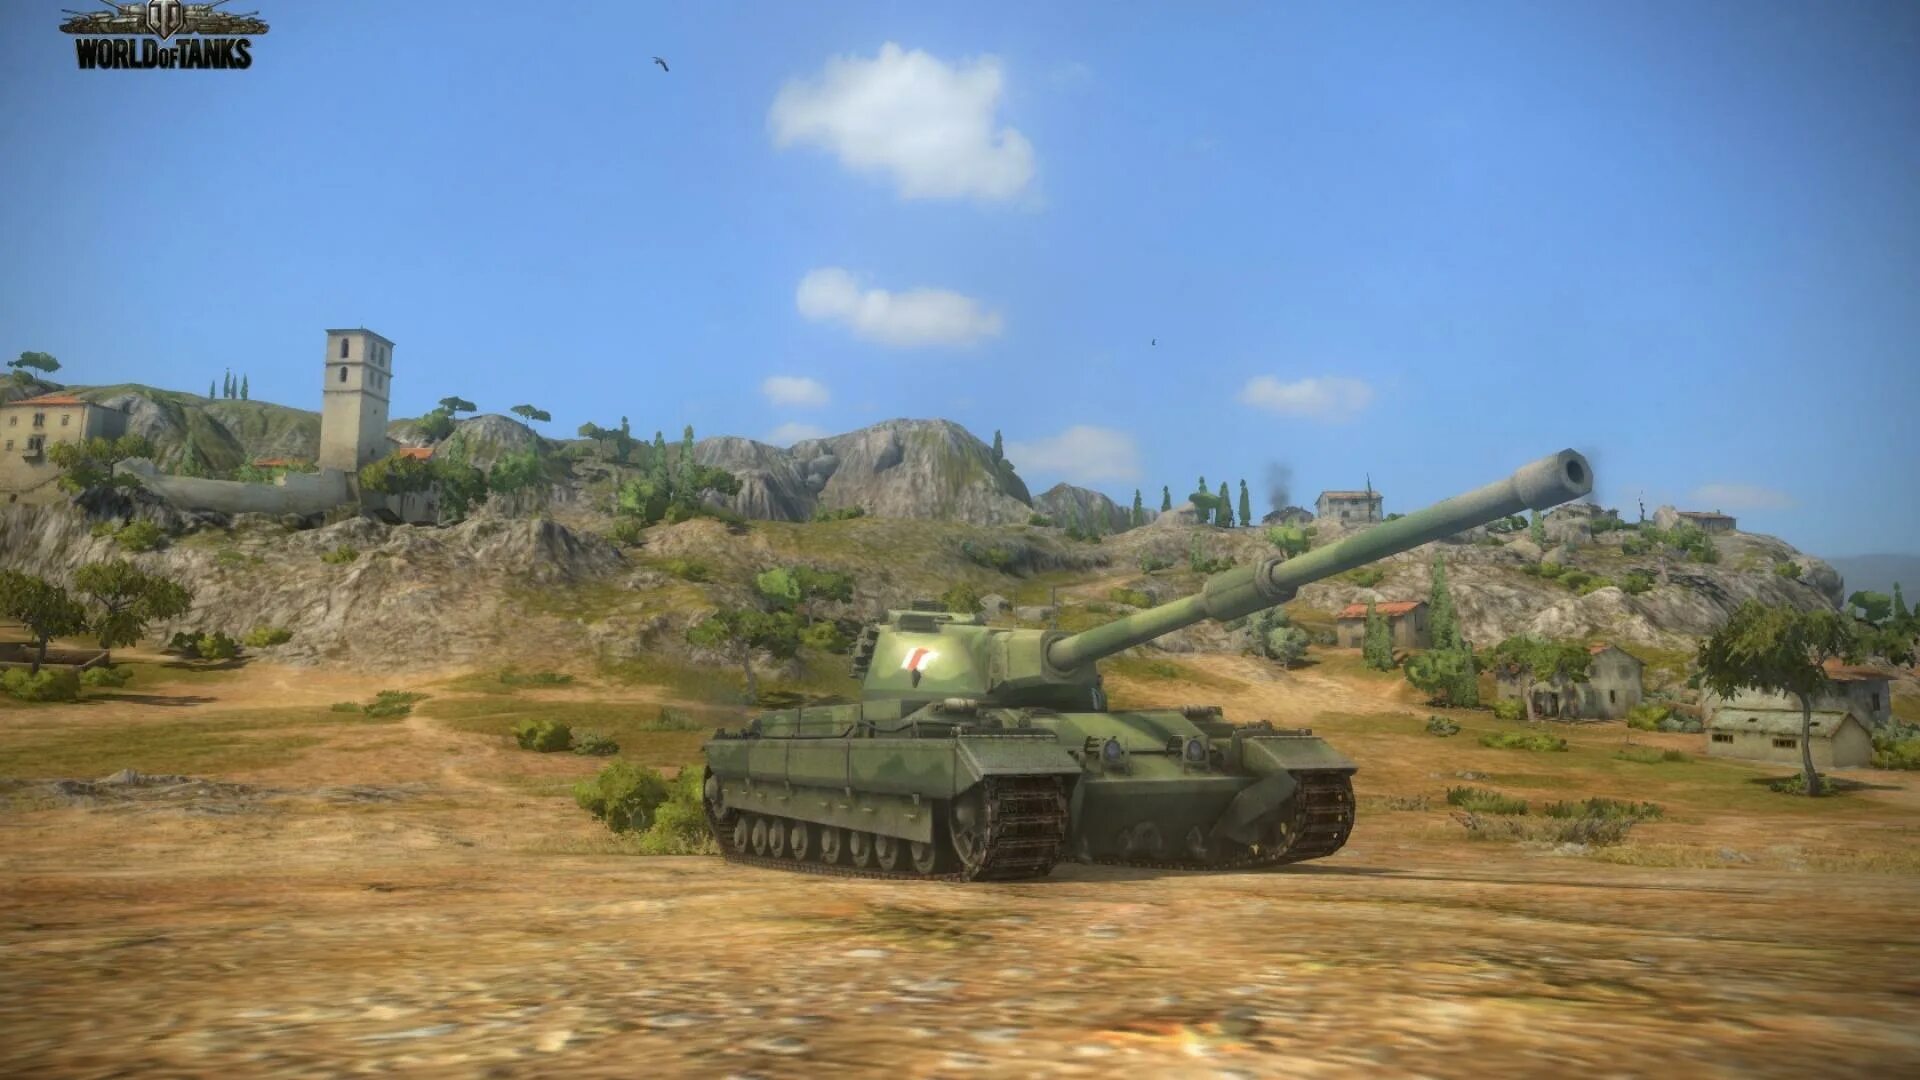 World of Tanks Скриншоты. Скриншот из WOT. Британские танки в игре. Британские танки World of Tanks. Игра ставить танки